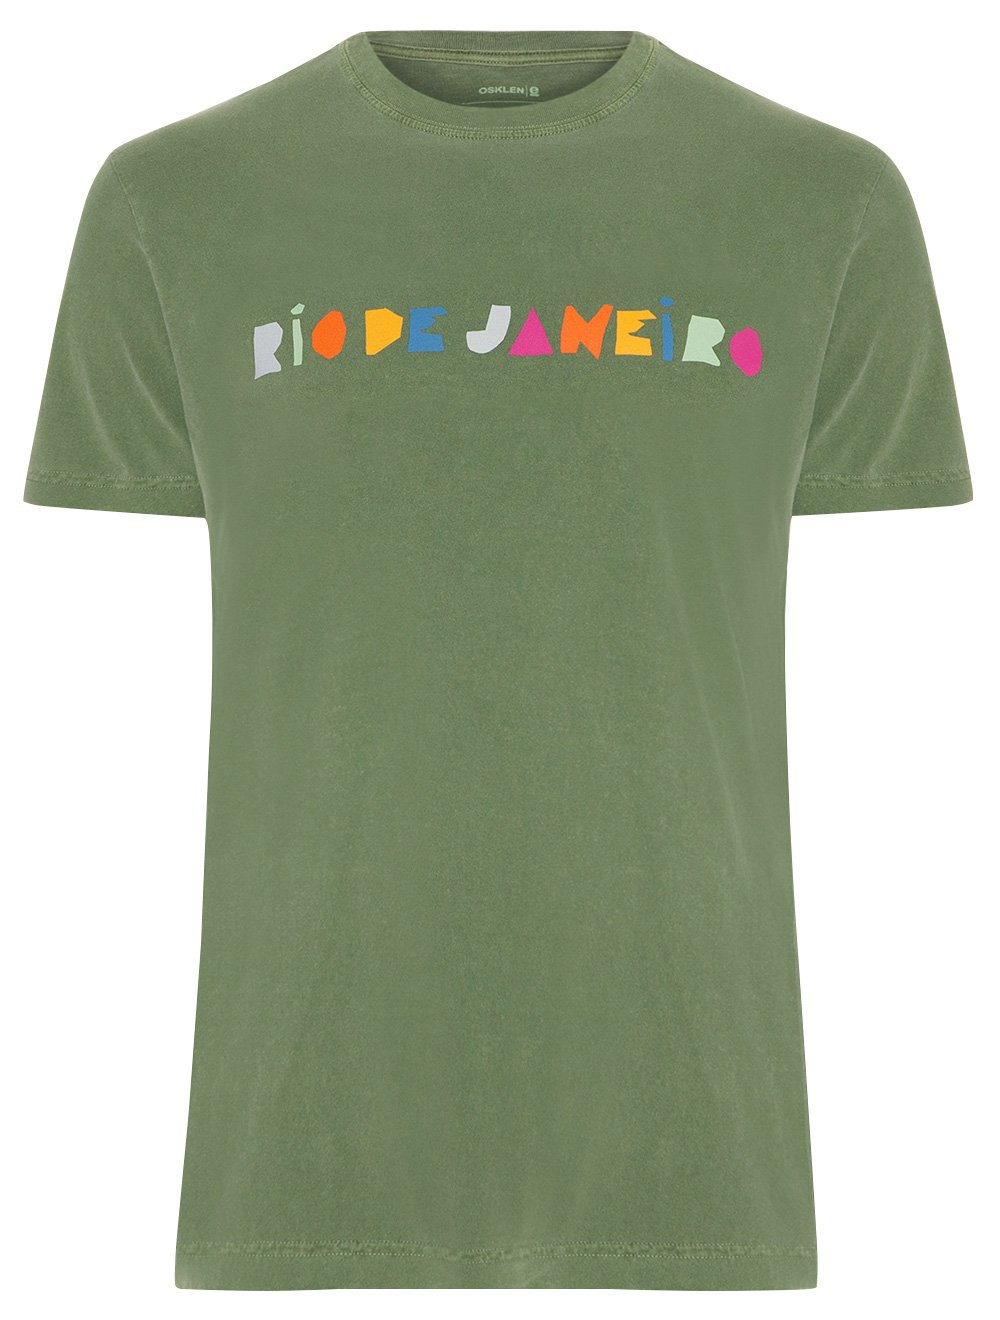 Camiseta Osklen Masculina Slim Stone Rio de Janeiro Recorte Verde